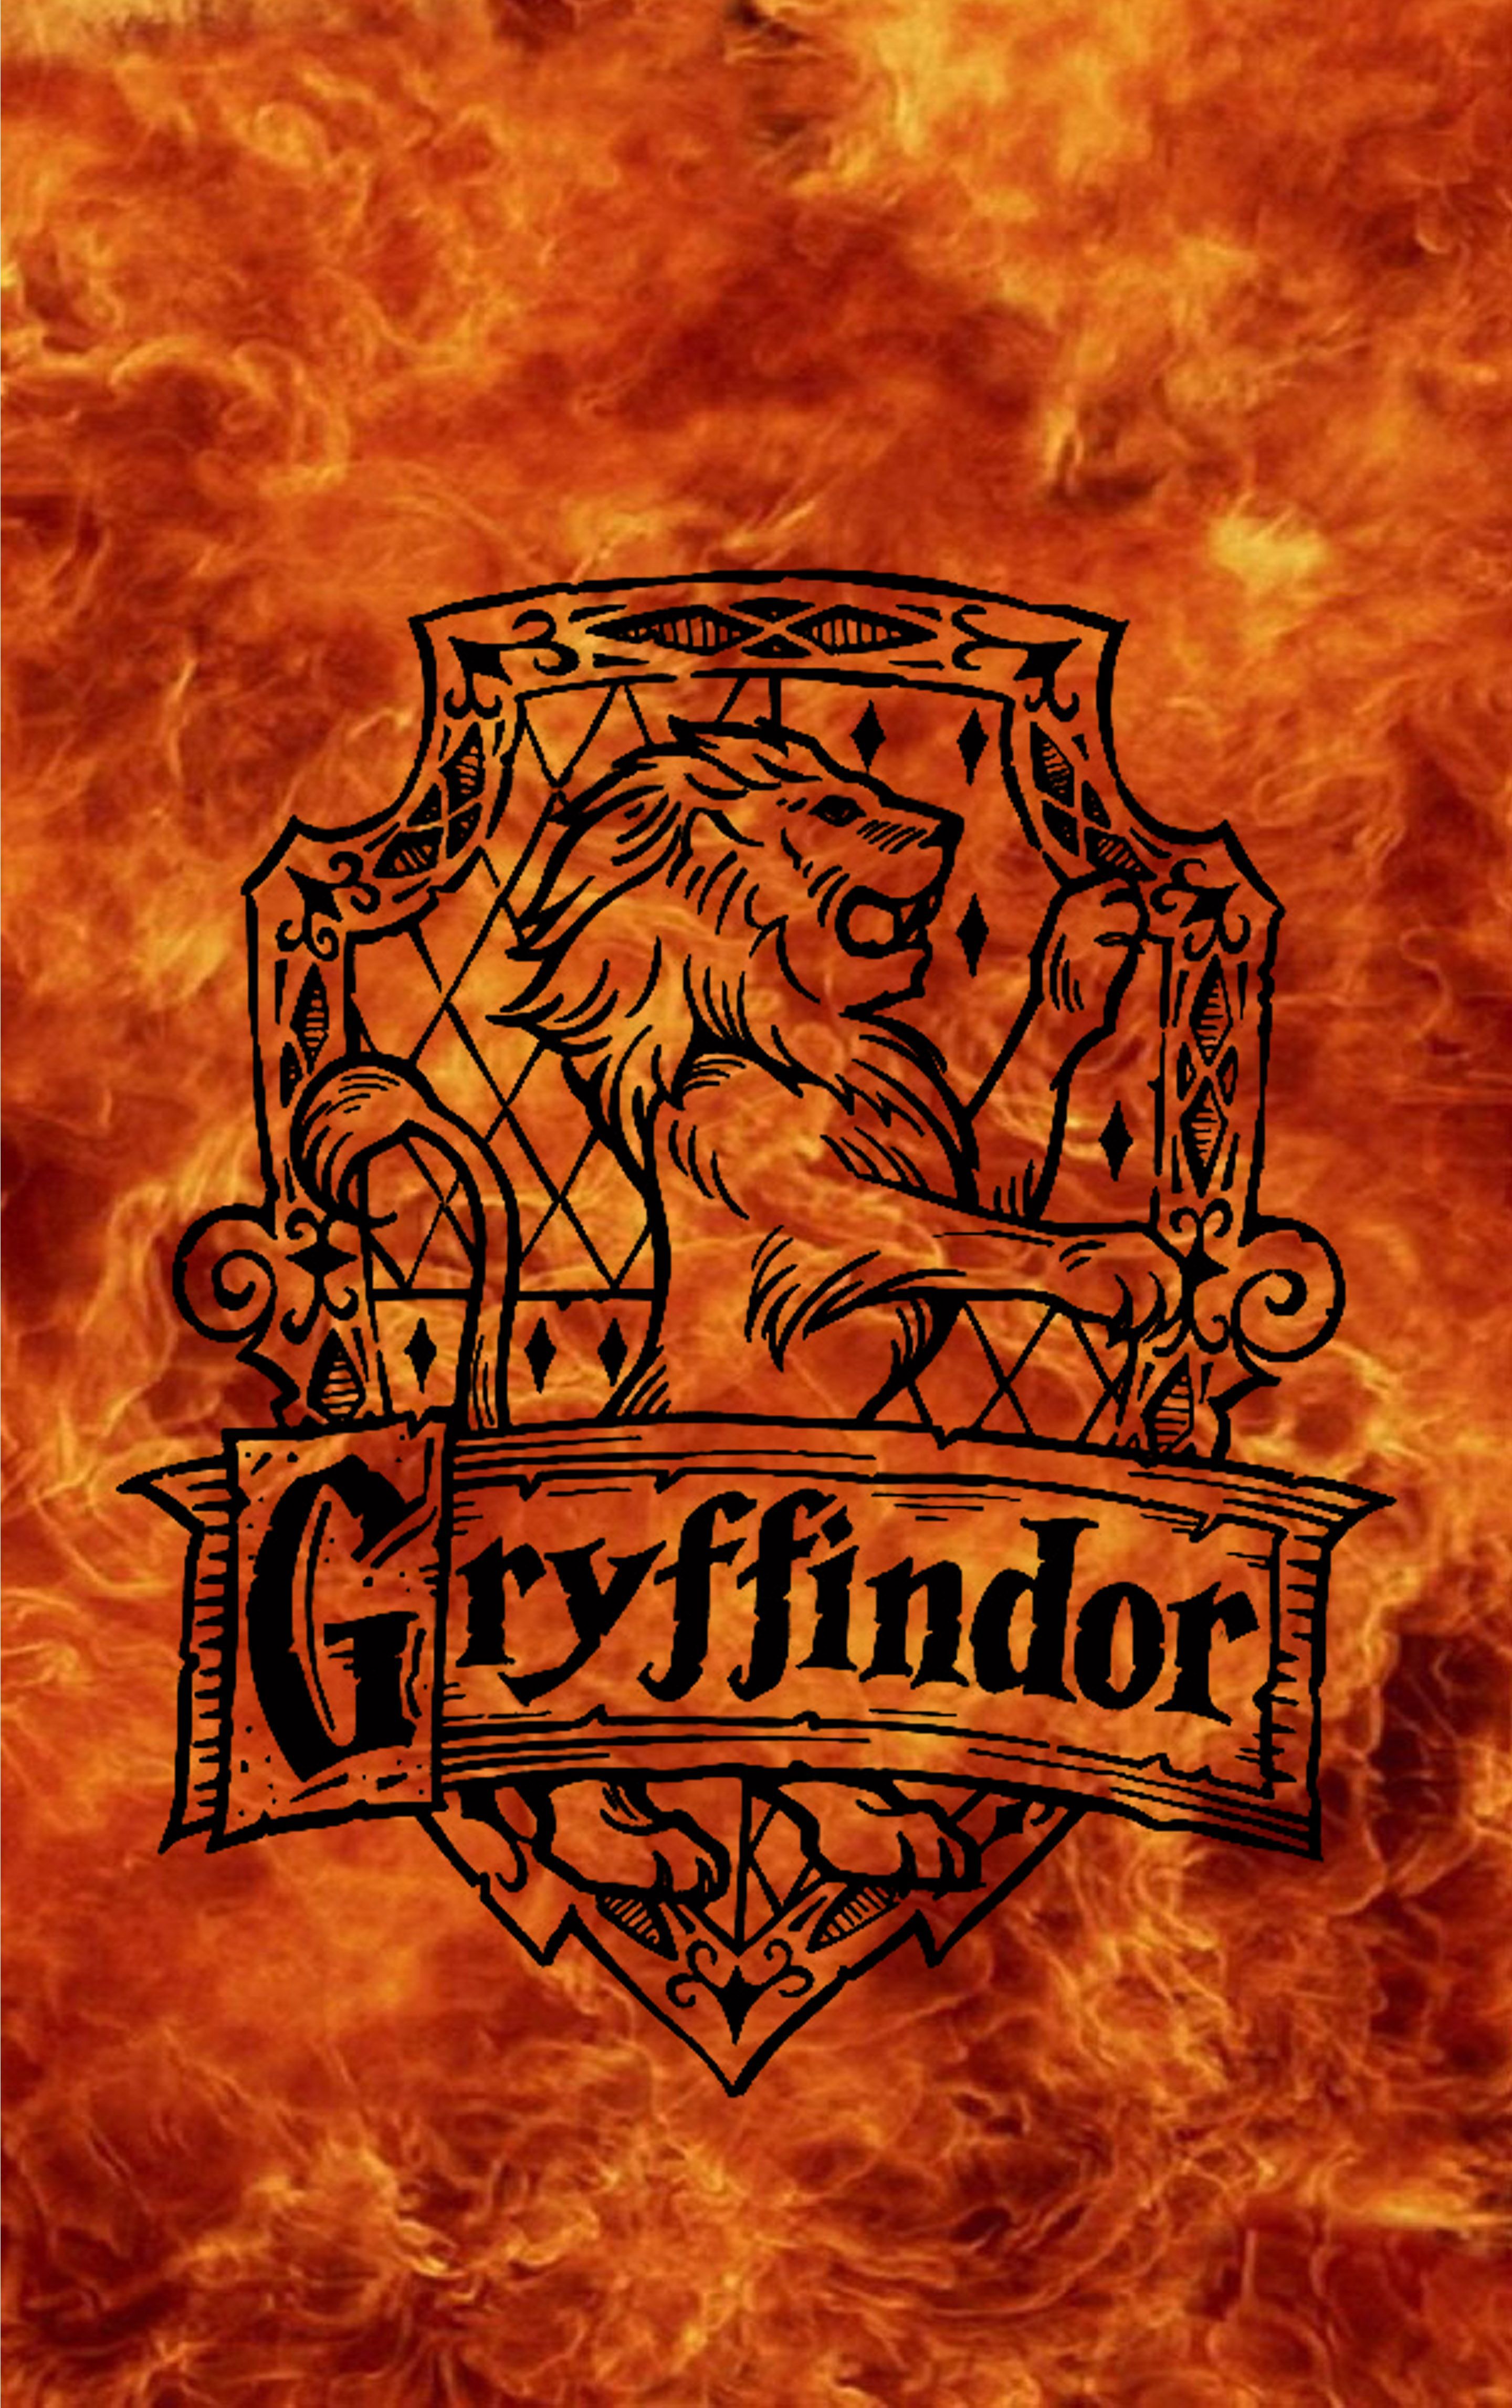 Gryffindor phone wallpaper background. Harry potter wallpaper